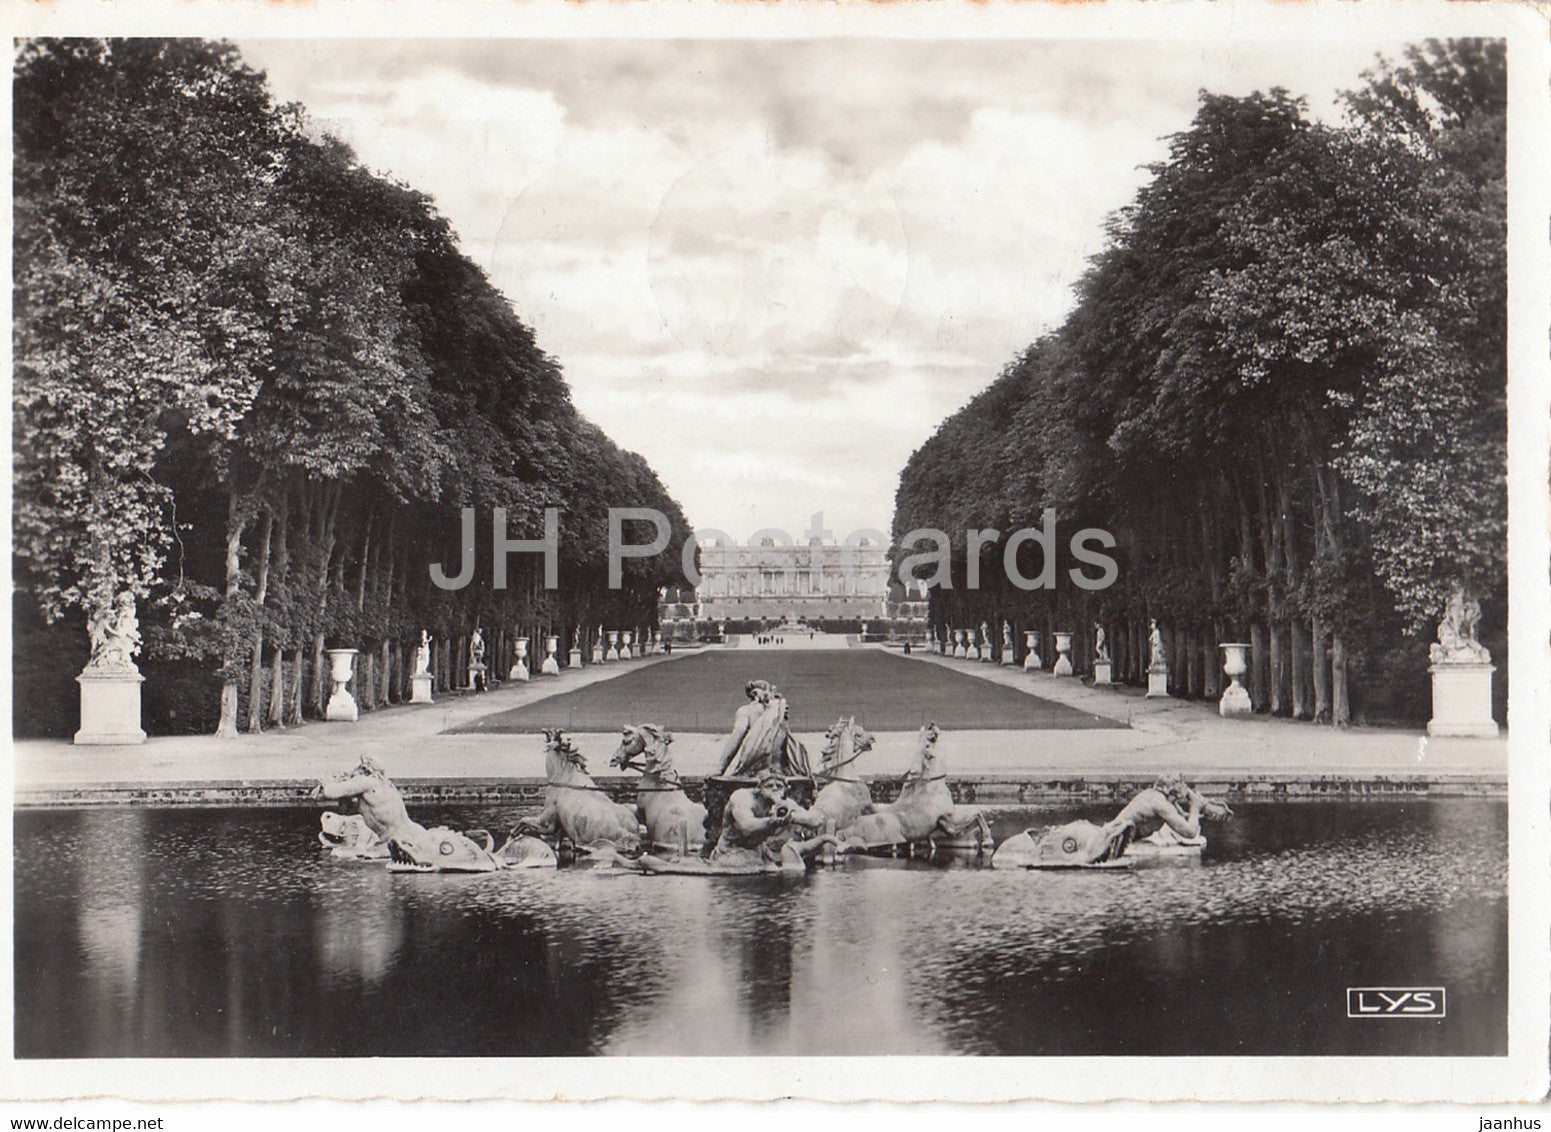 Versailles - Allee Royale et Bassin d'Appolon - The Park - Royal Avenue - old postcard - 1948 - France - used - JH Postcards